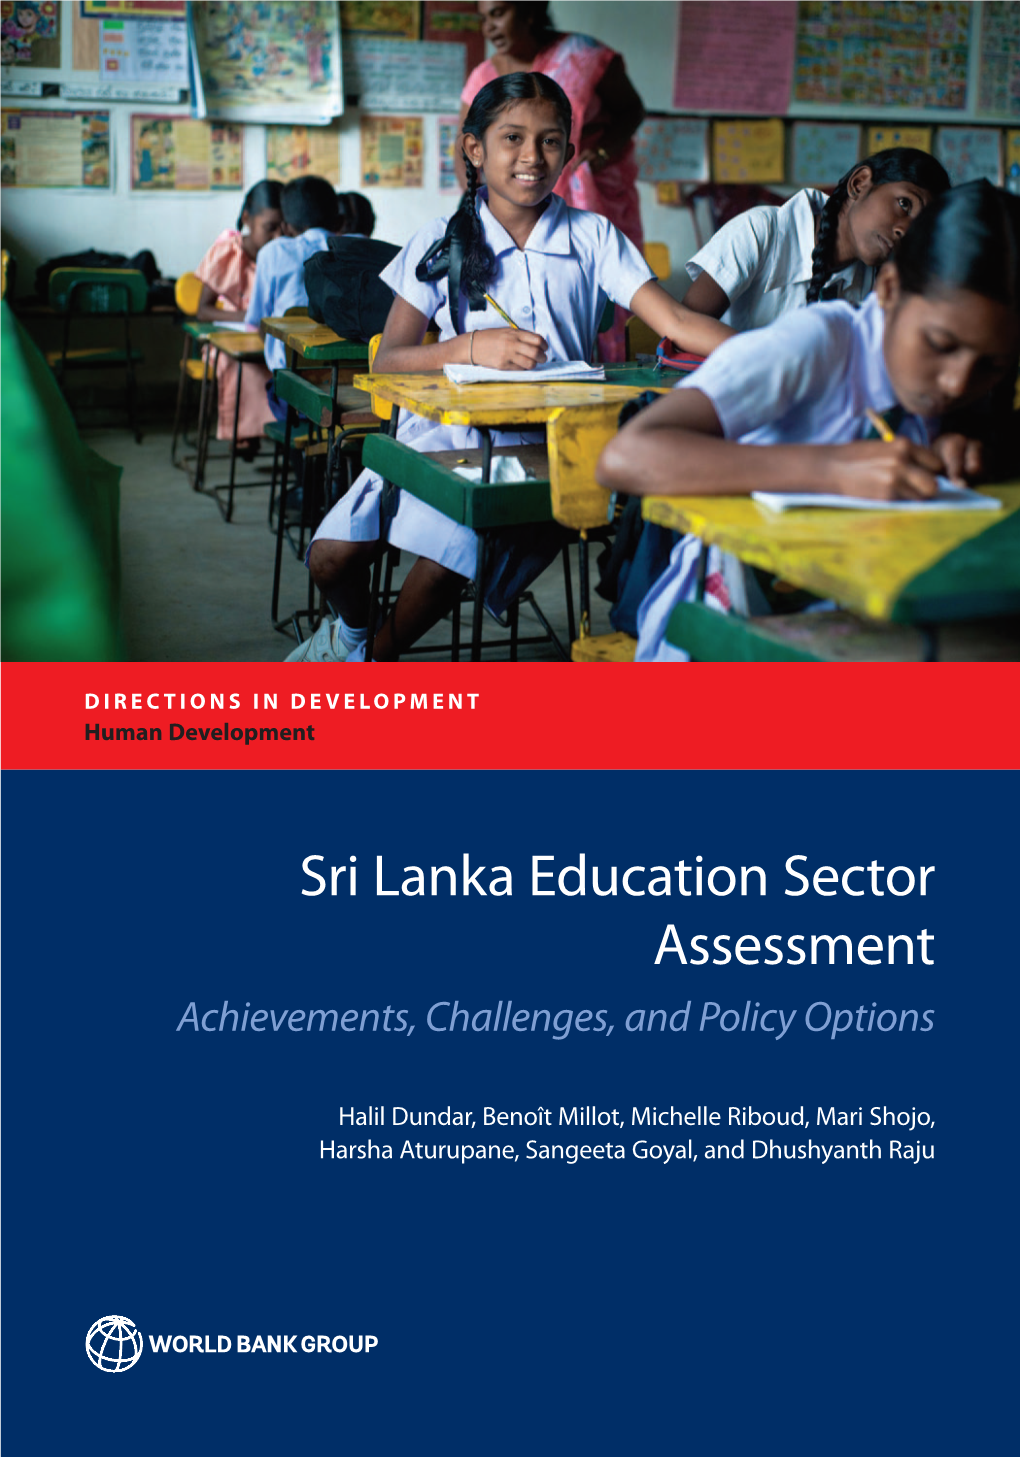 Sri Lanka Education Sector Assessment Dundar, Millot, Riboud, Shojo, Aturupane, Goyal, and Raju